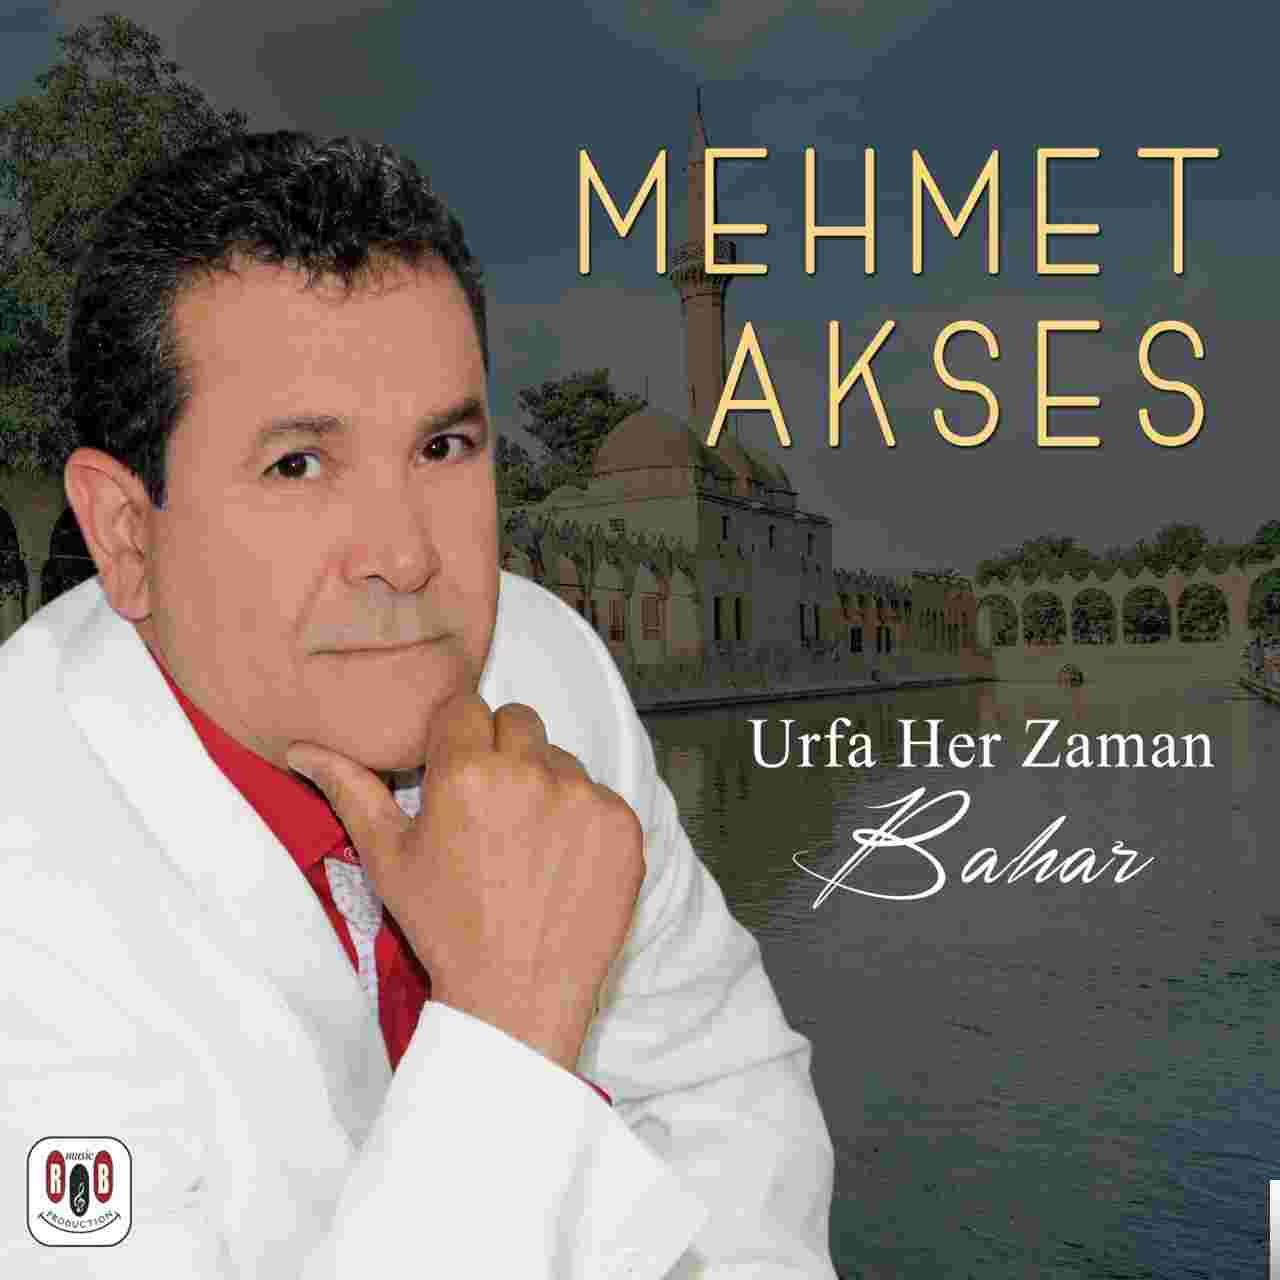 Mehmet Akses Urfa Her Zaman Bahar (2018)